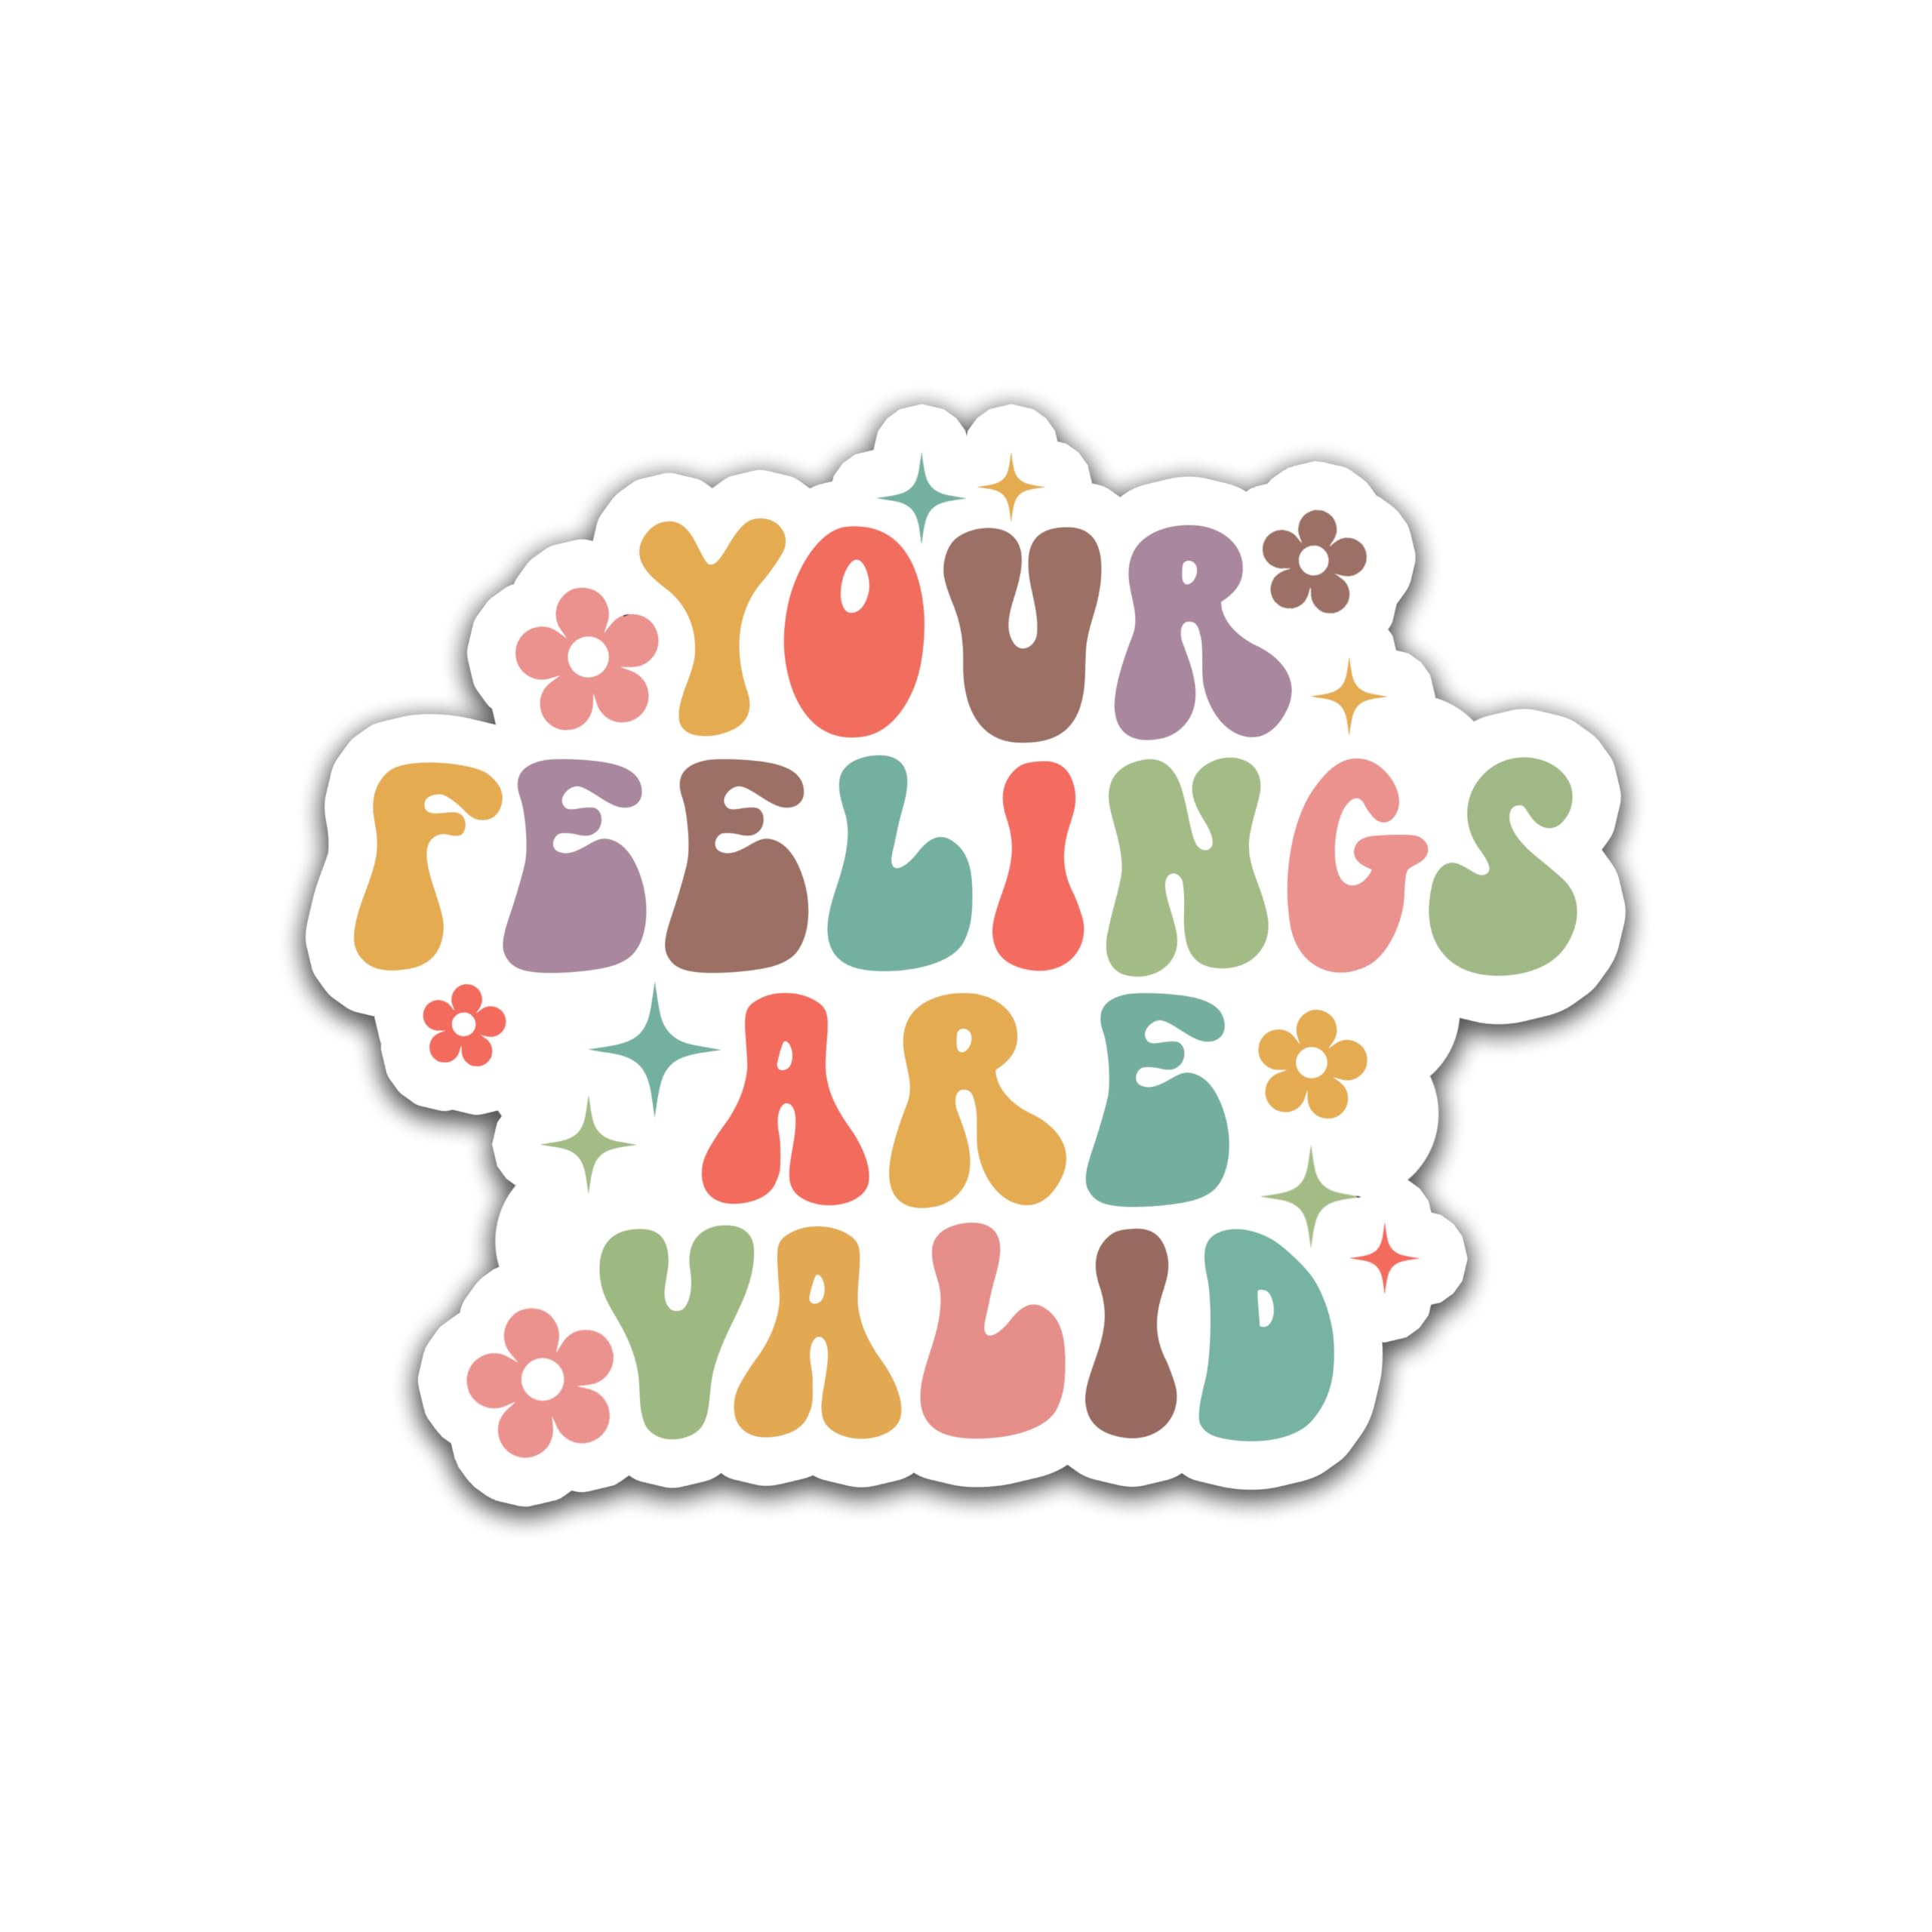 Miraki Your Feelings Are Valid Sticker, Mental Health Sticker, Neurodiversity Sticker, Motivational Sticker, Water Assitant Die-Cut Vinyl Decals for Laptop, Phone, Water Bottles, Christmas Stickers